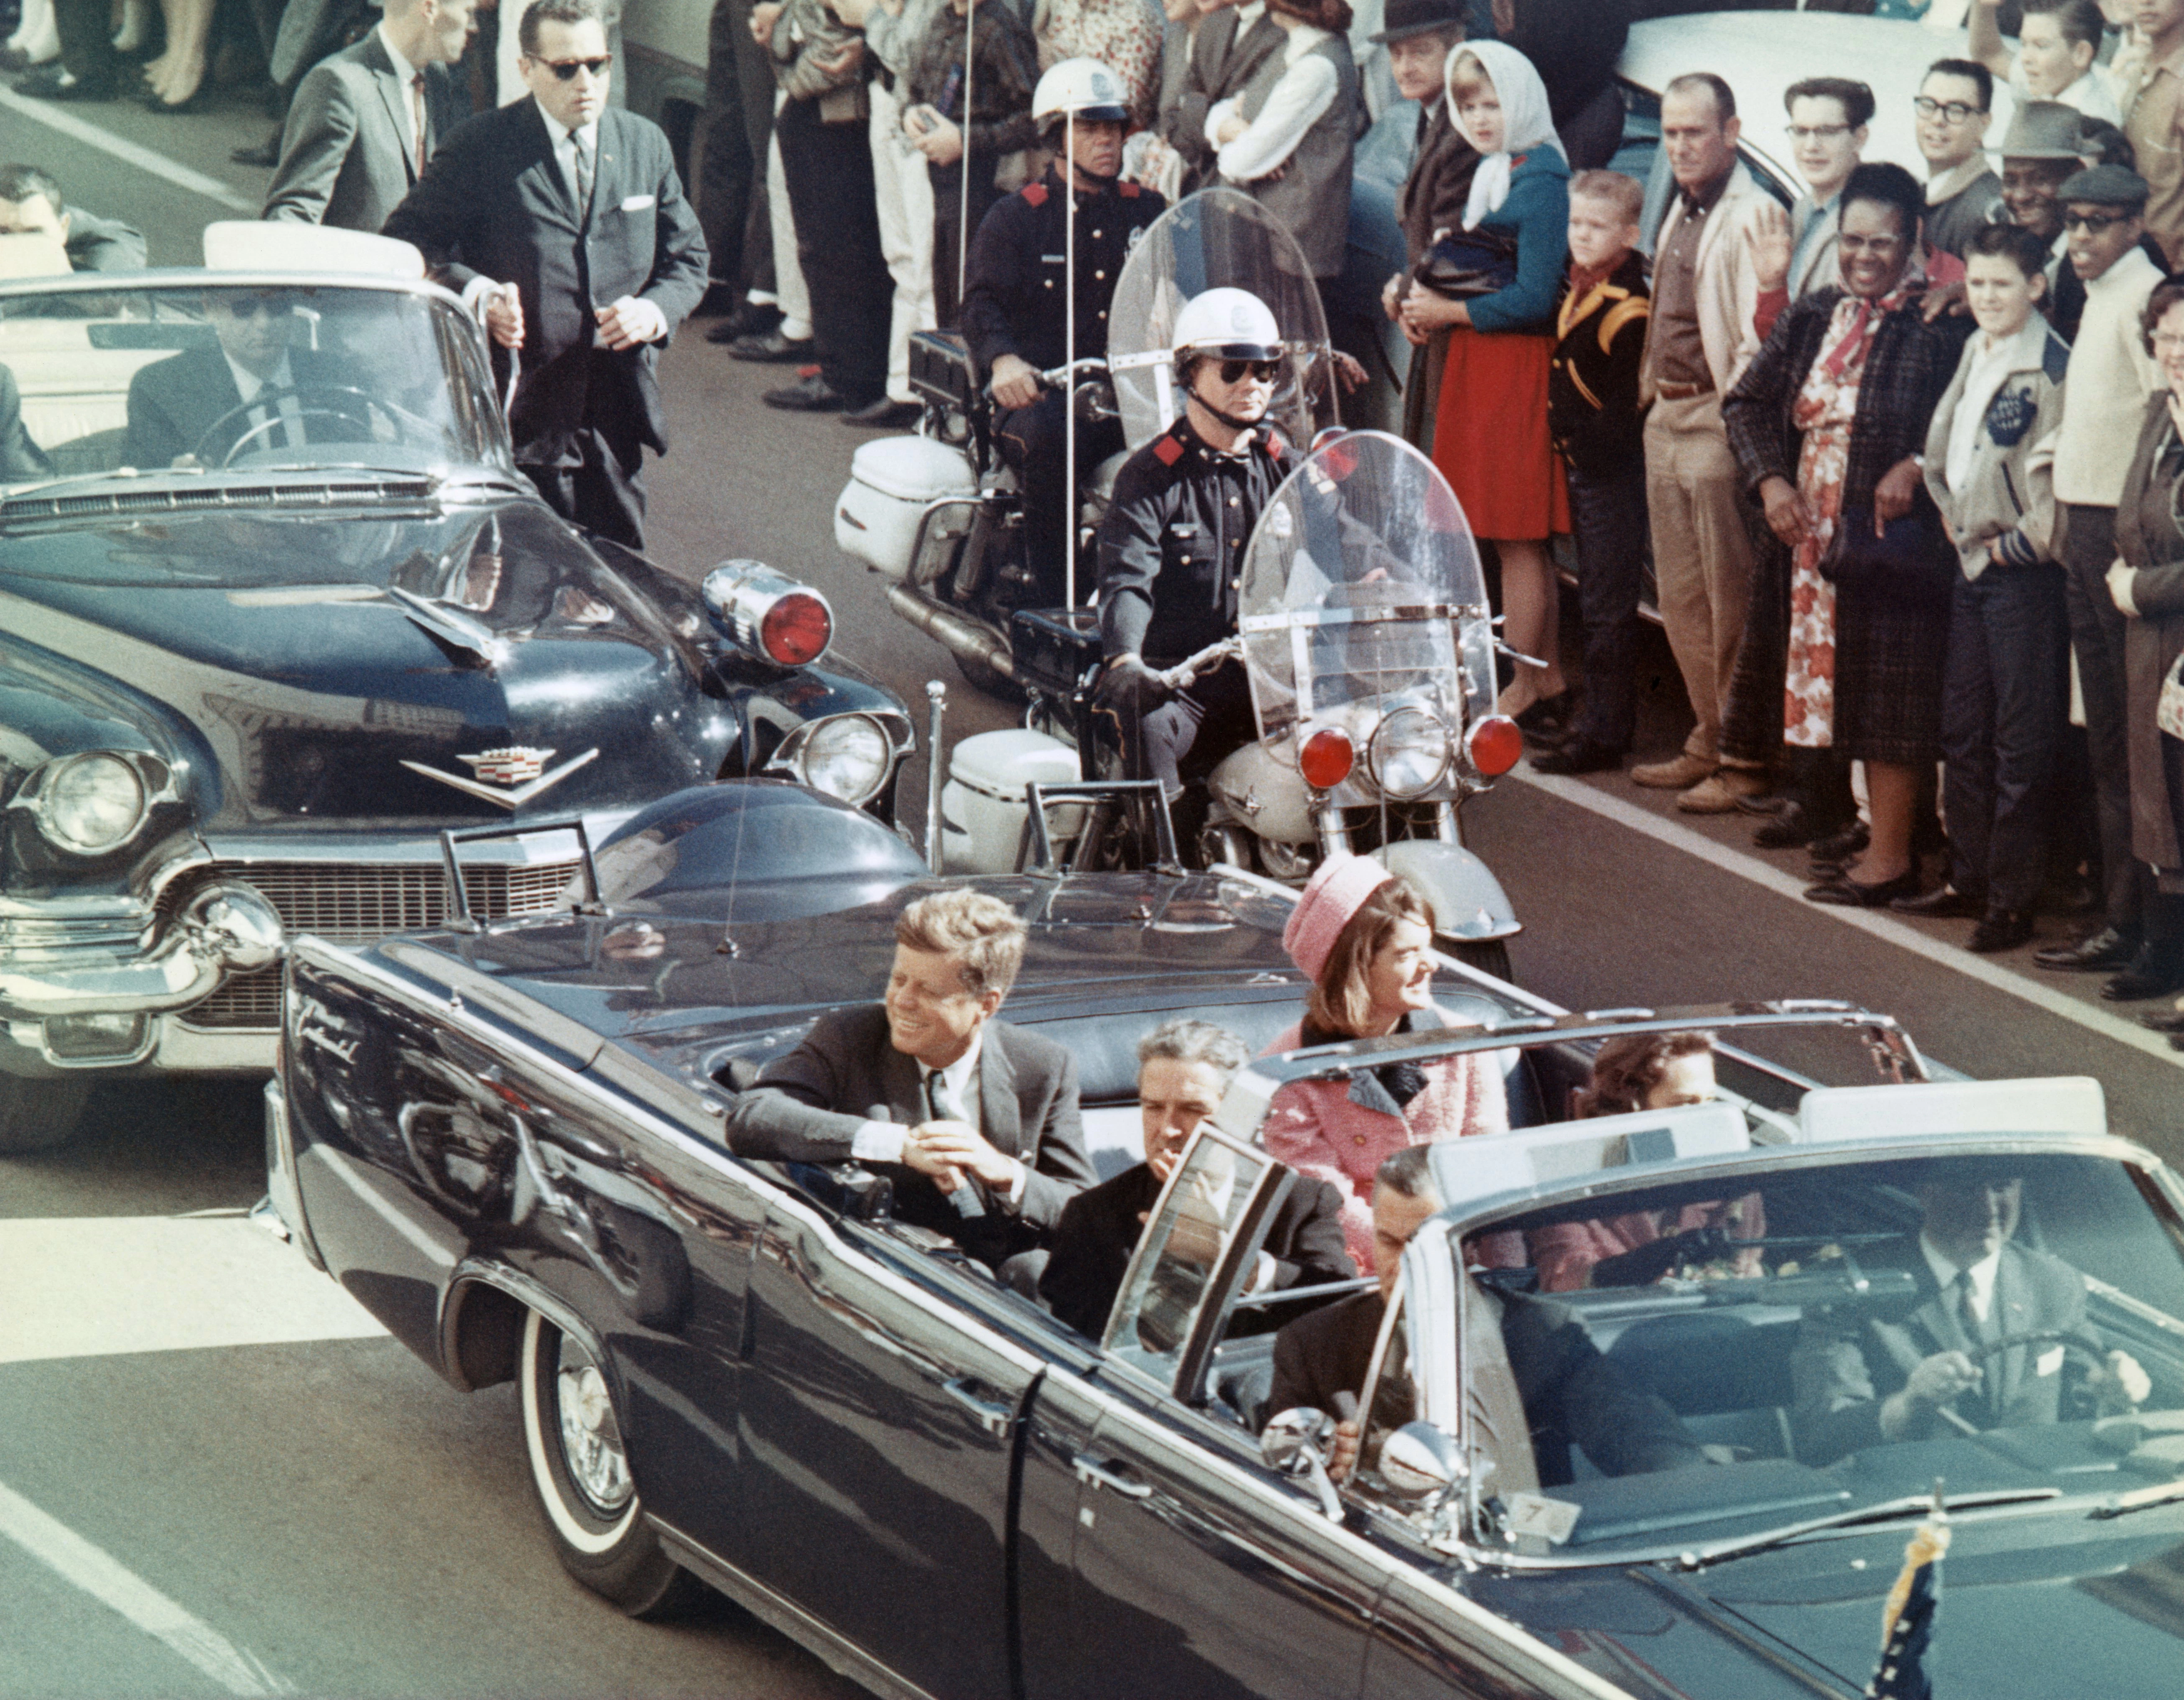 Джон та Жаклін Кеннеді у день трагедії, 22 листопада 19630